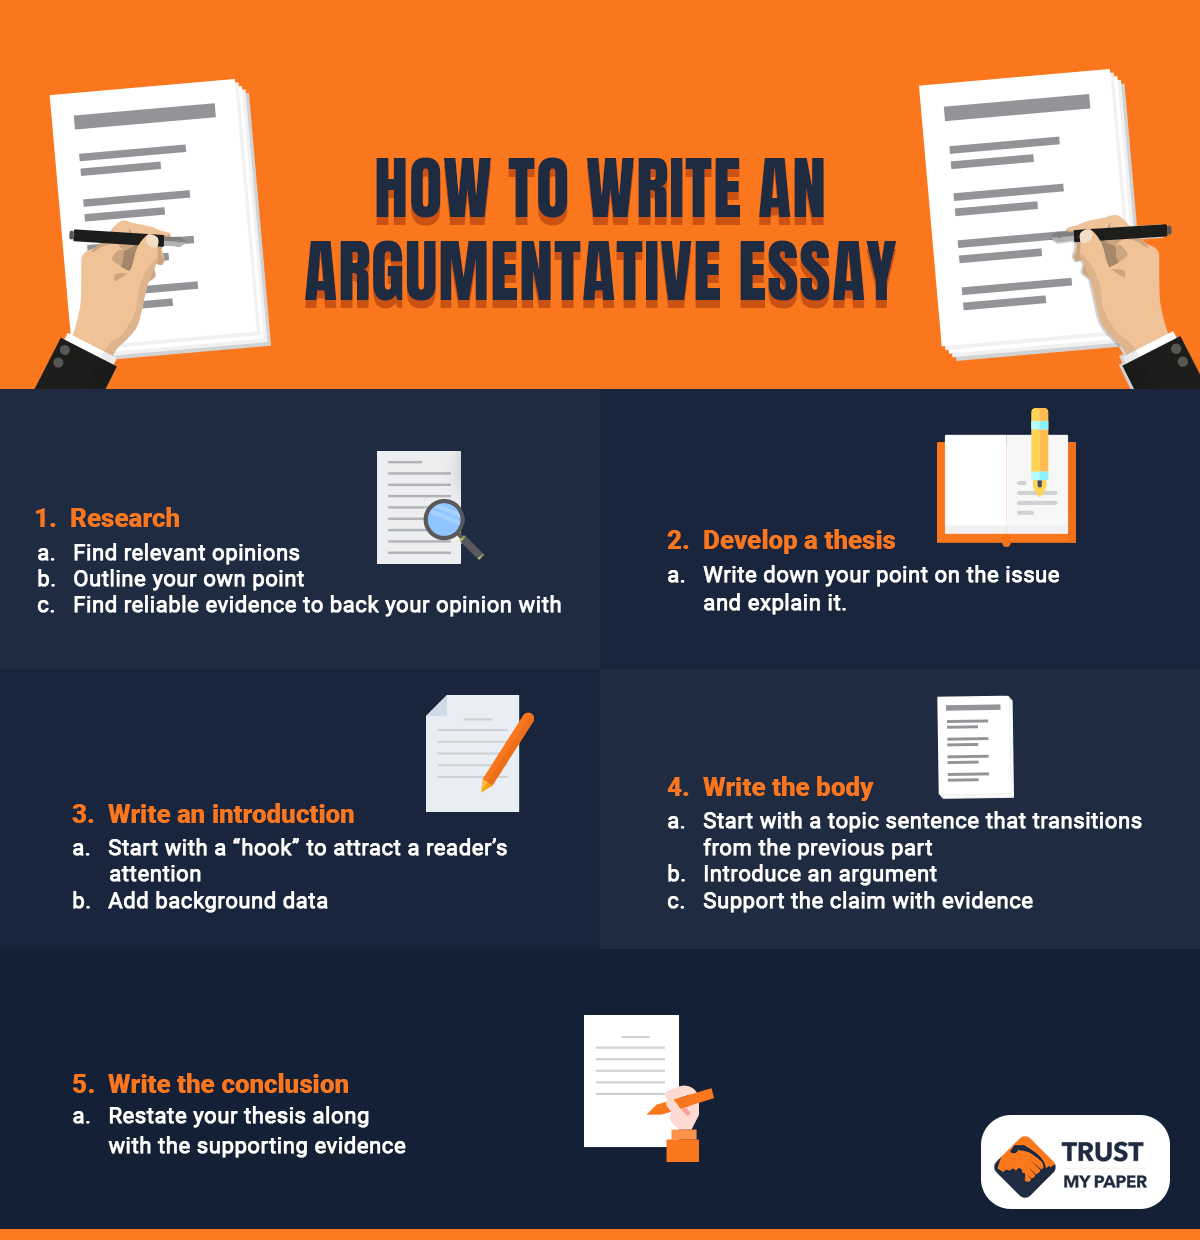 tips for an argumentative essay